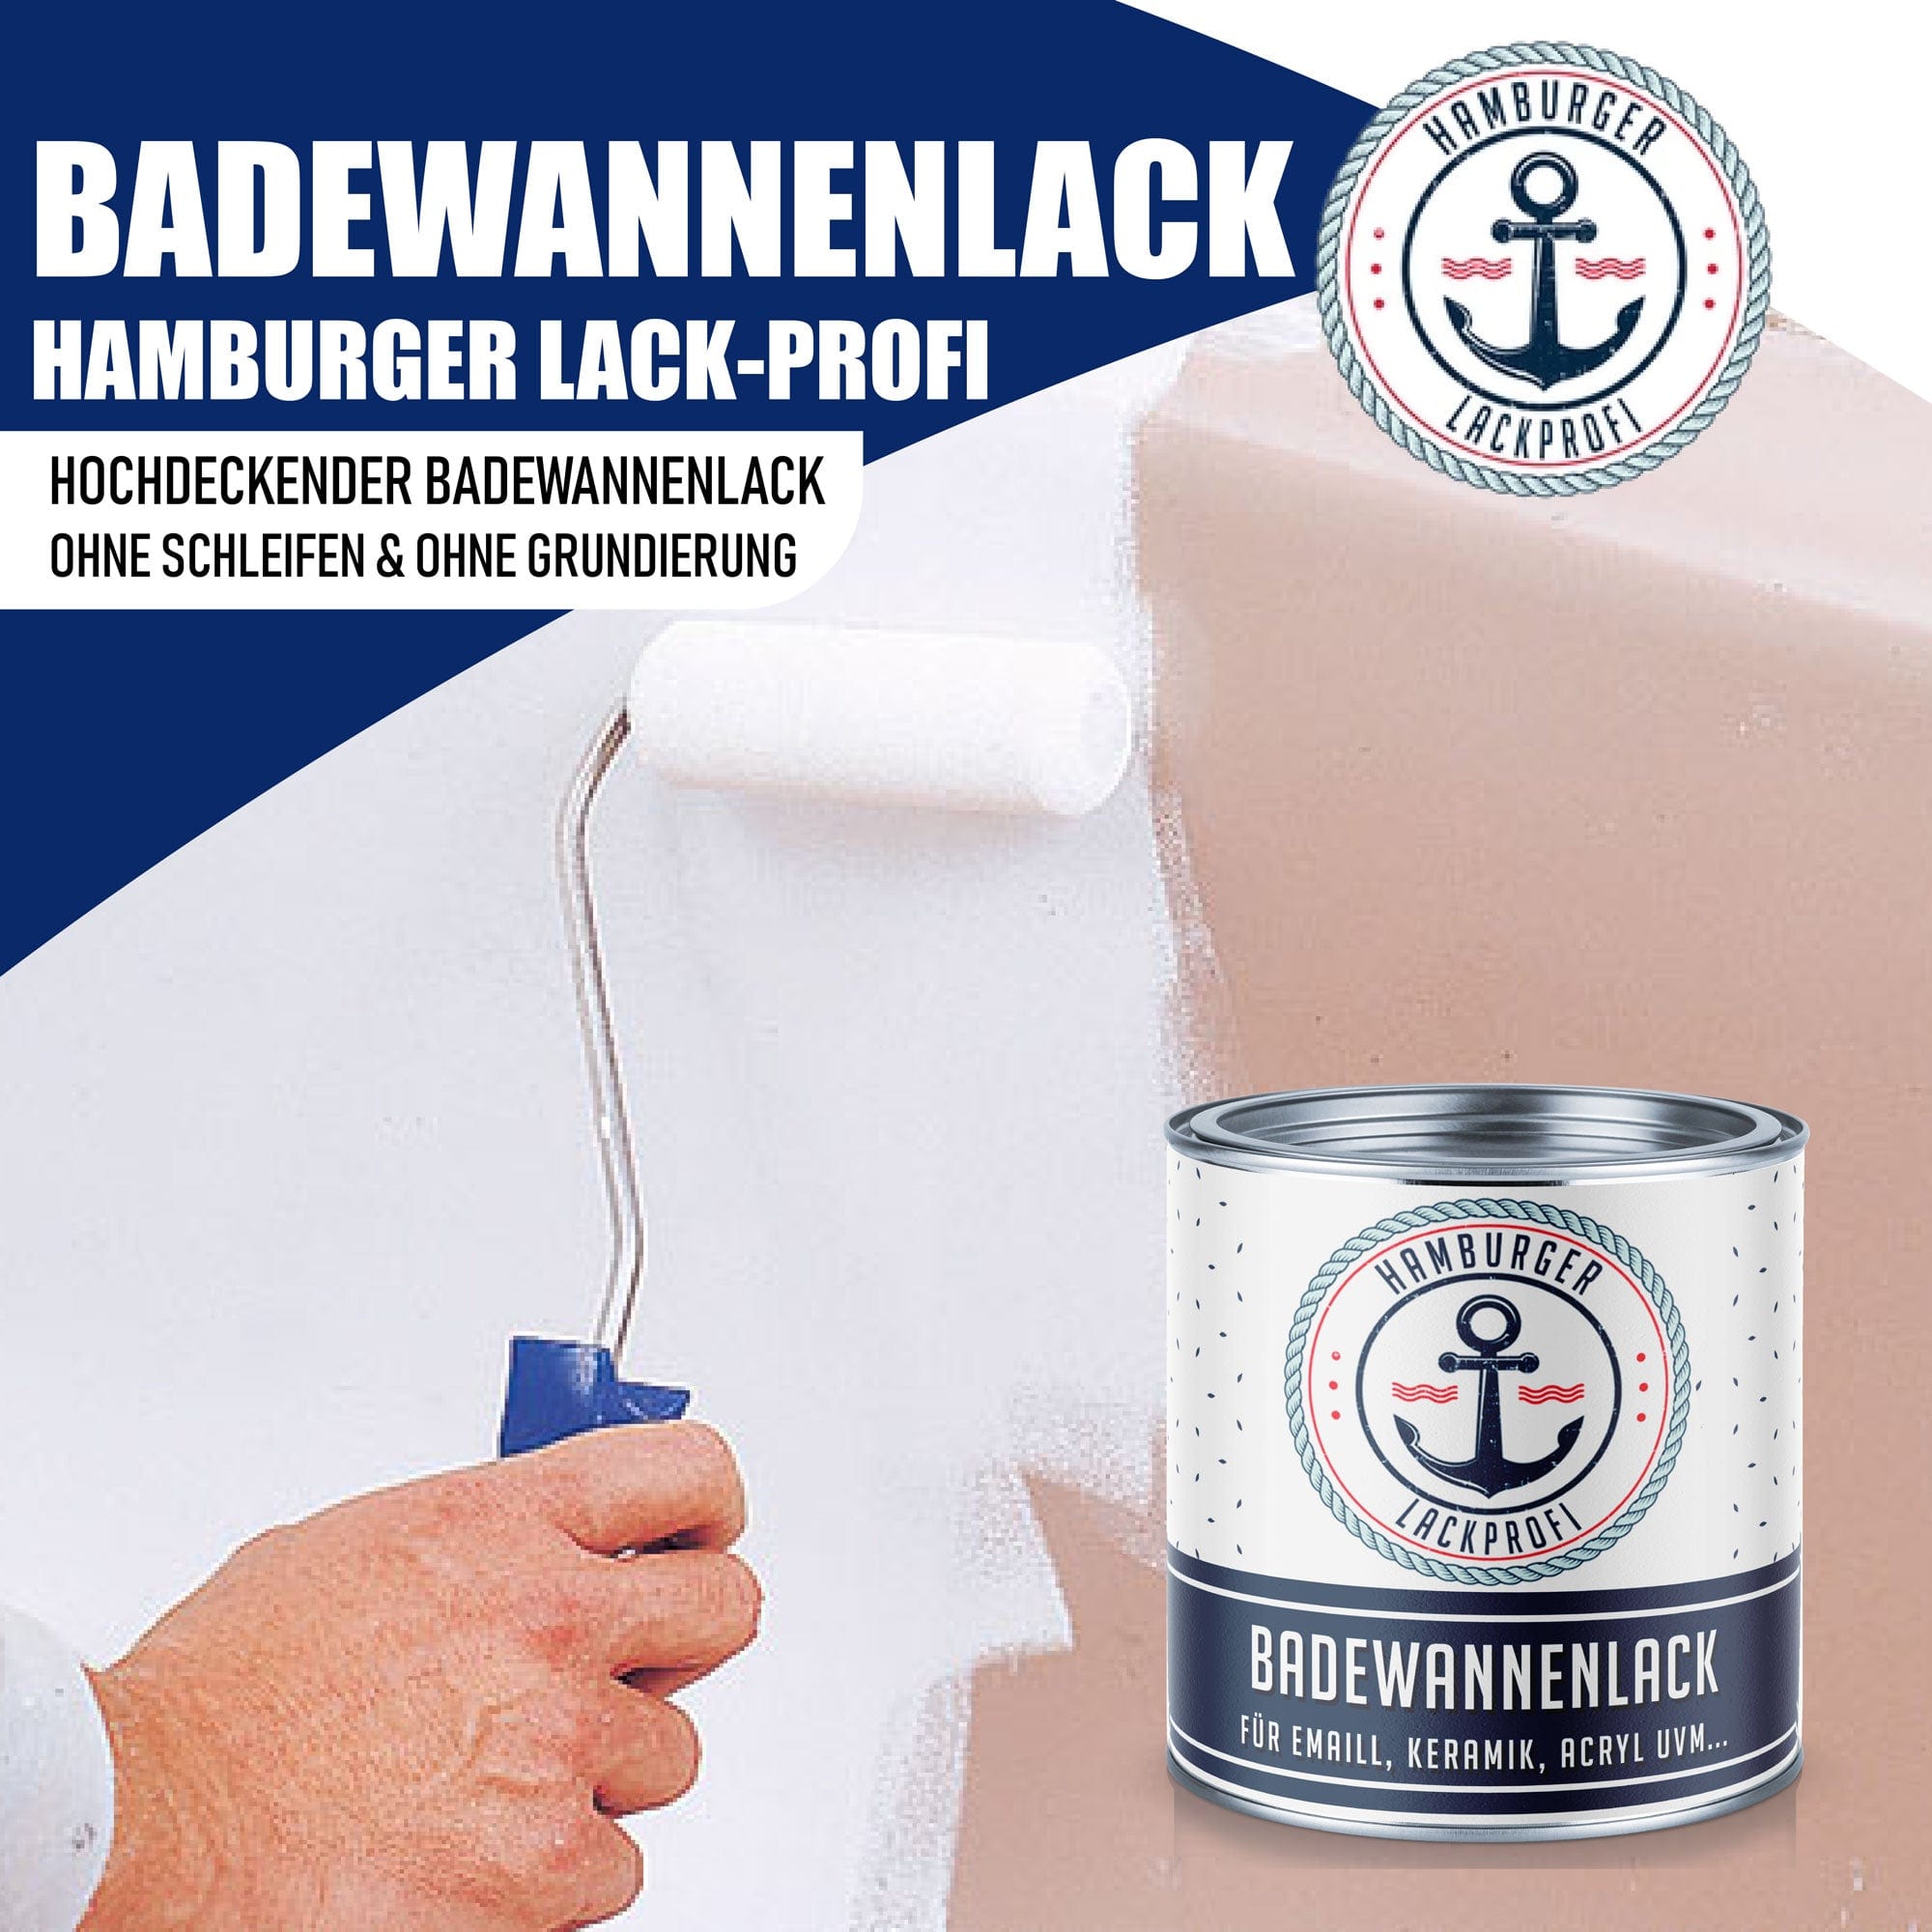 Hamburger Lack-Profi Badewannenlack Hamburger Lack-Profi 2K Badewannenlack Anthrazitgrau RAL 7016 - Glänzend / Seidenmatt / Matt